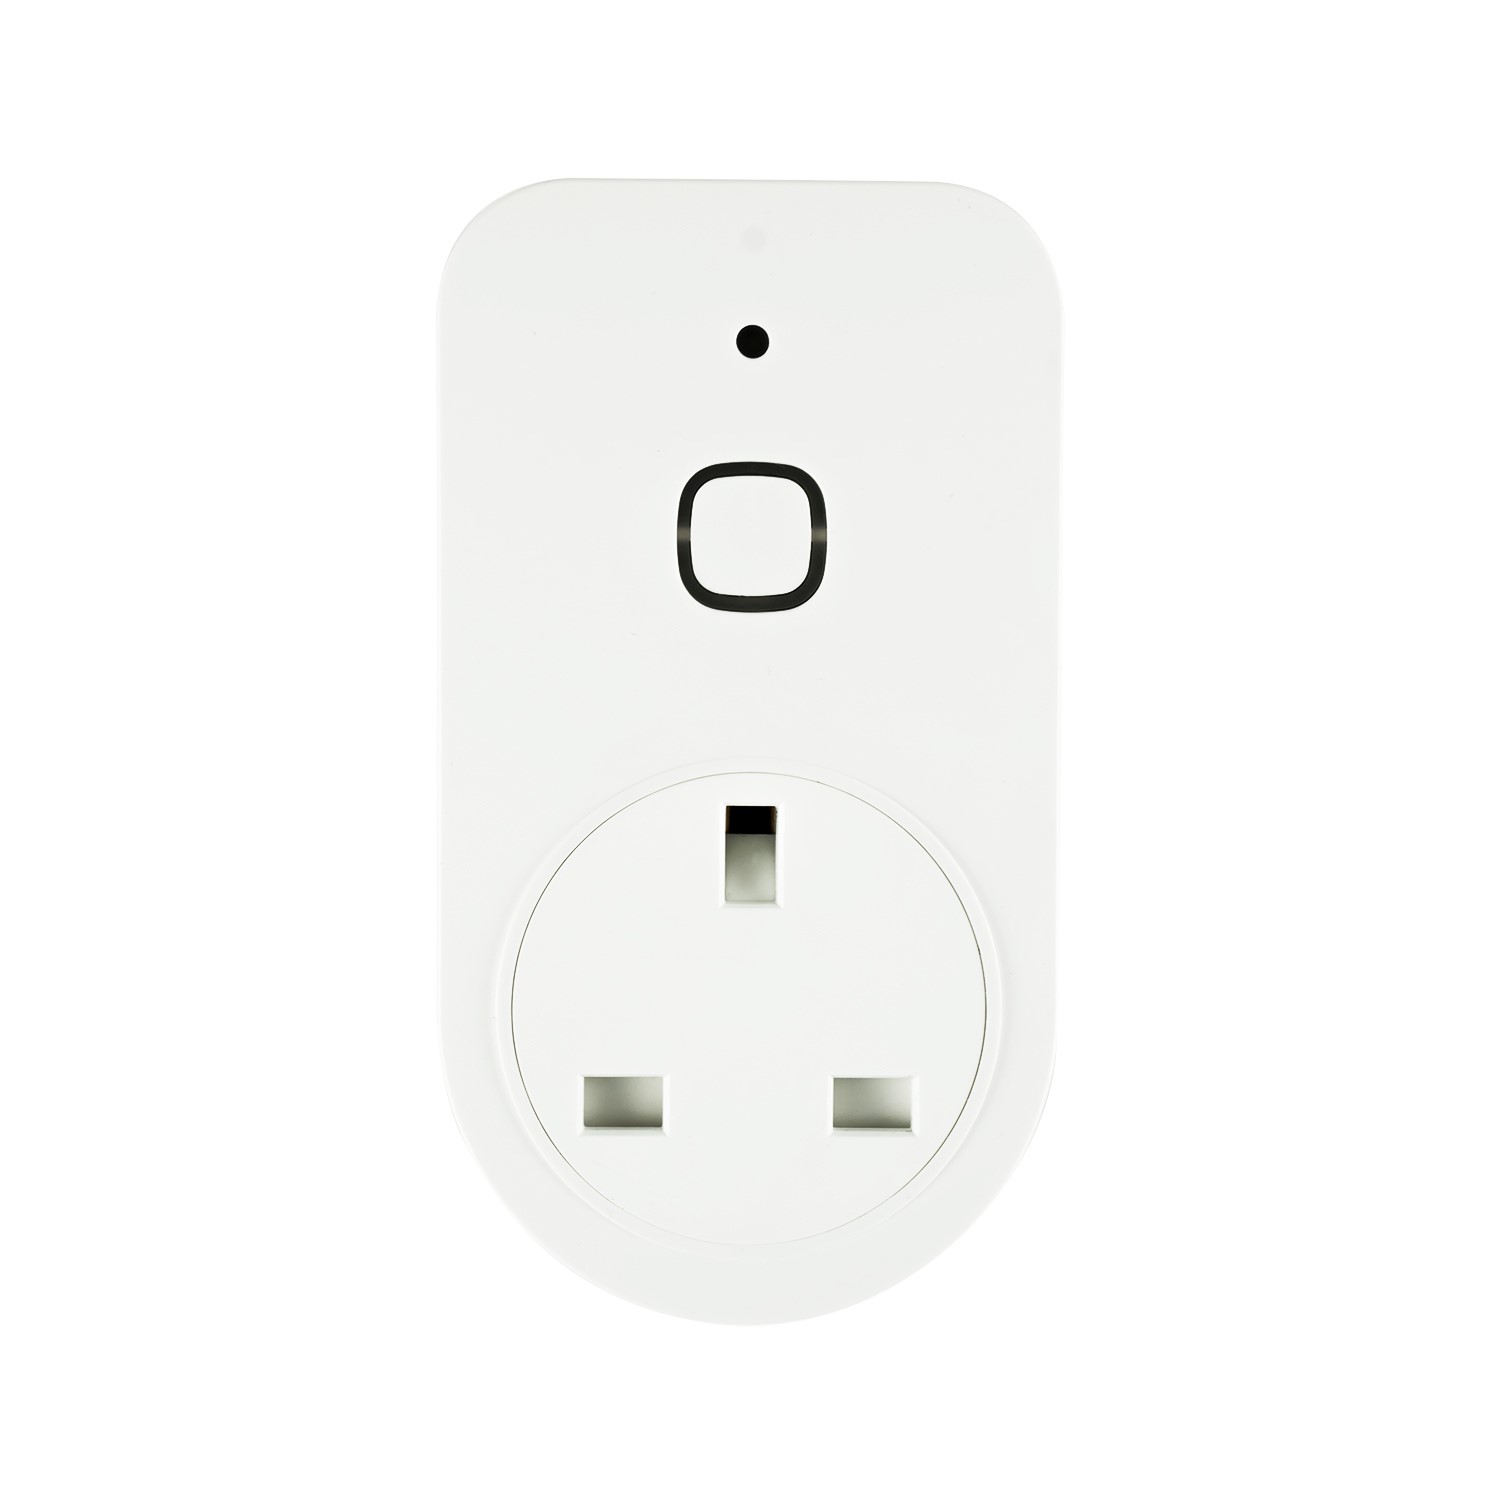 Smart Plug with power meter to monitor energy - Alexa/Google Home